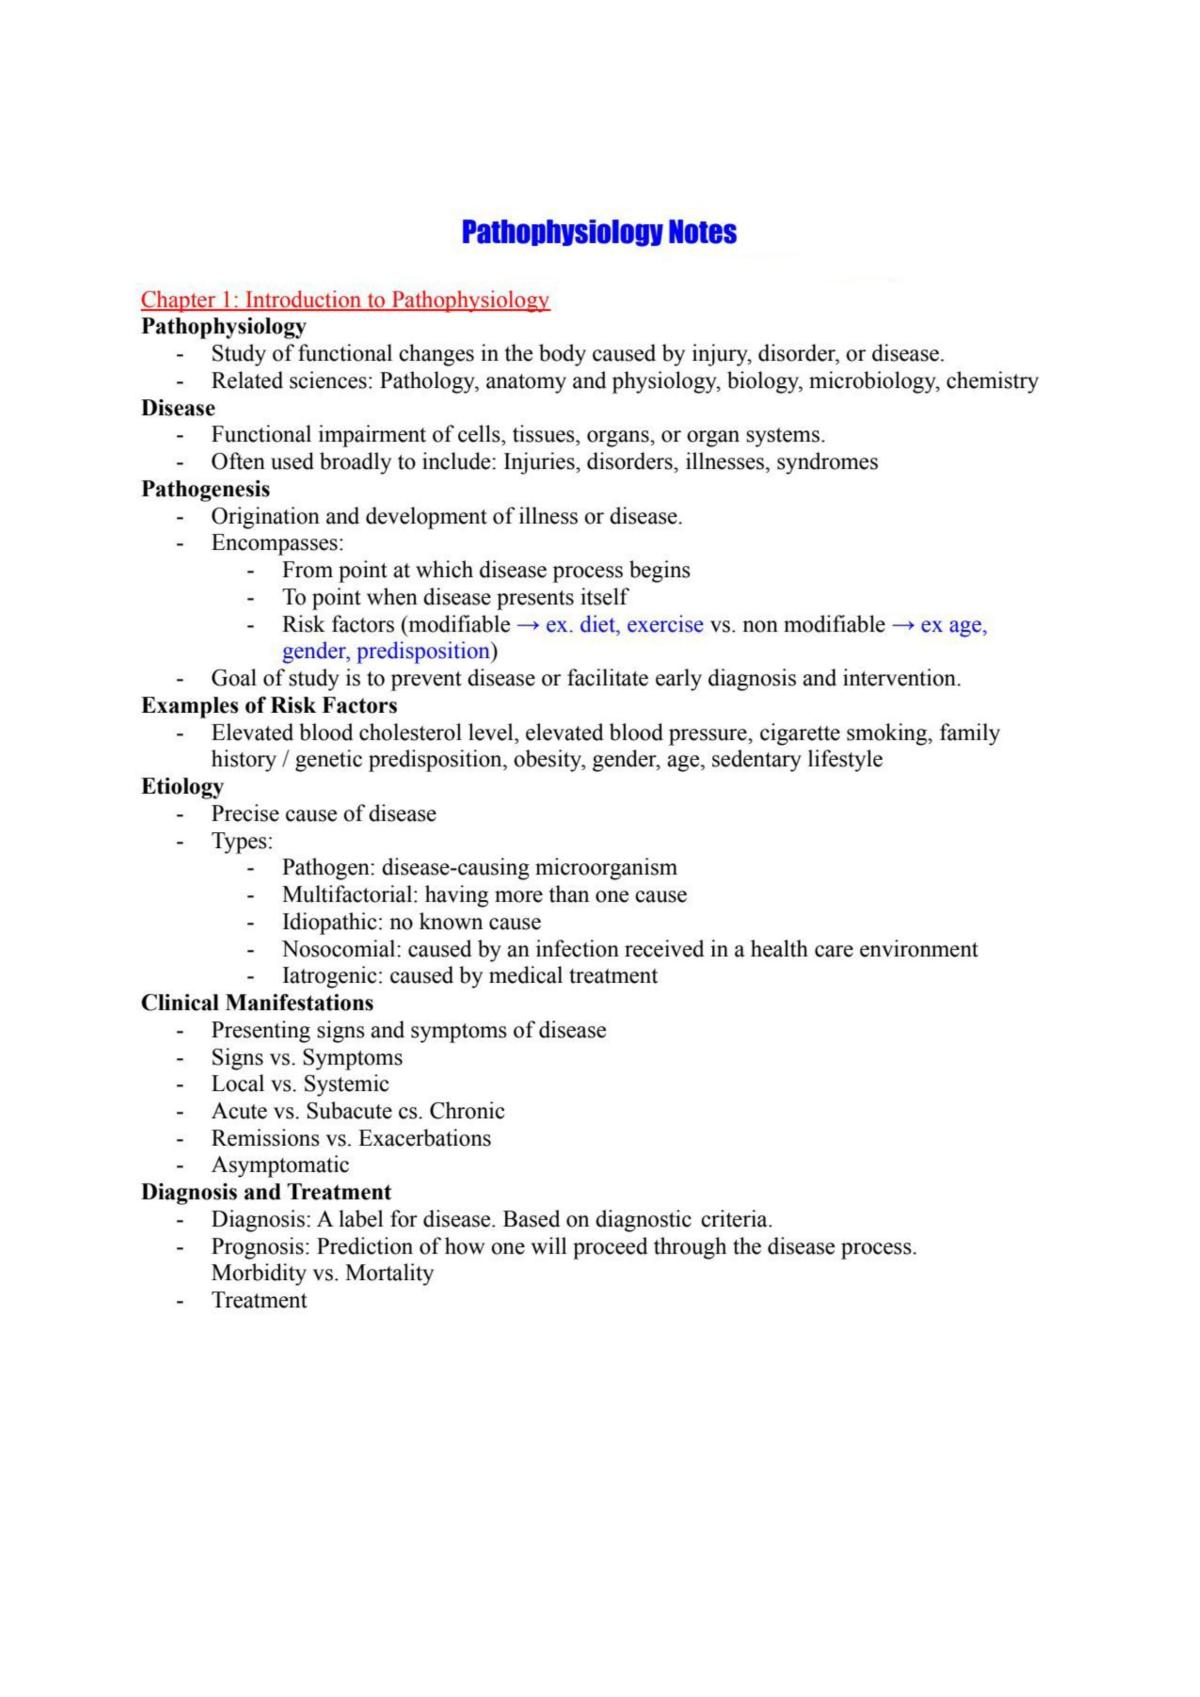 Pathophysiology Notes - Page 1